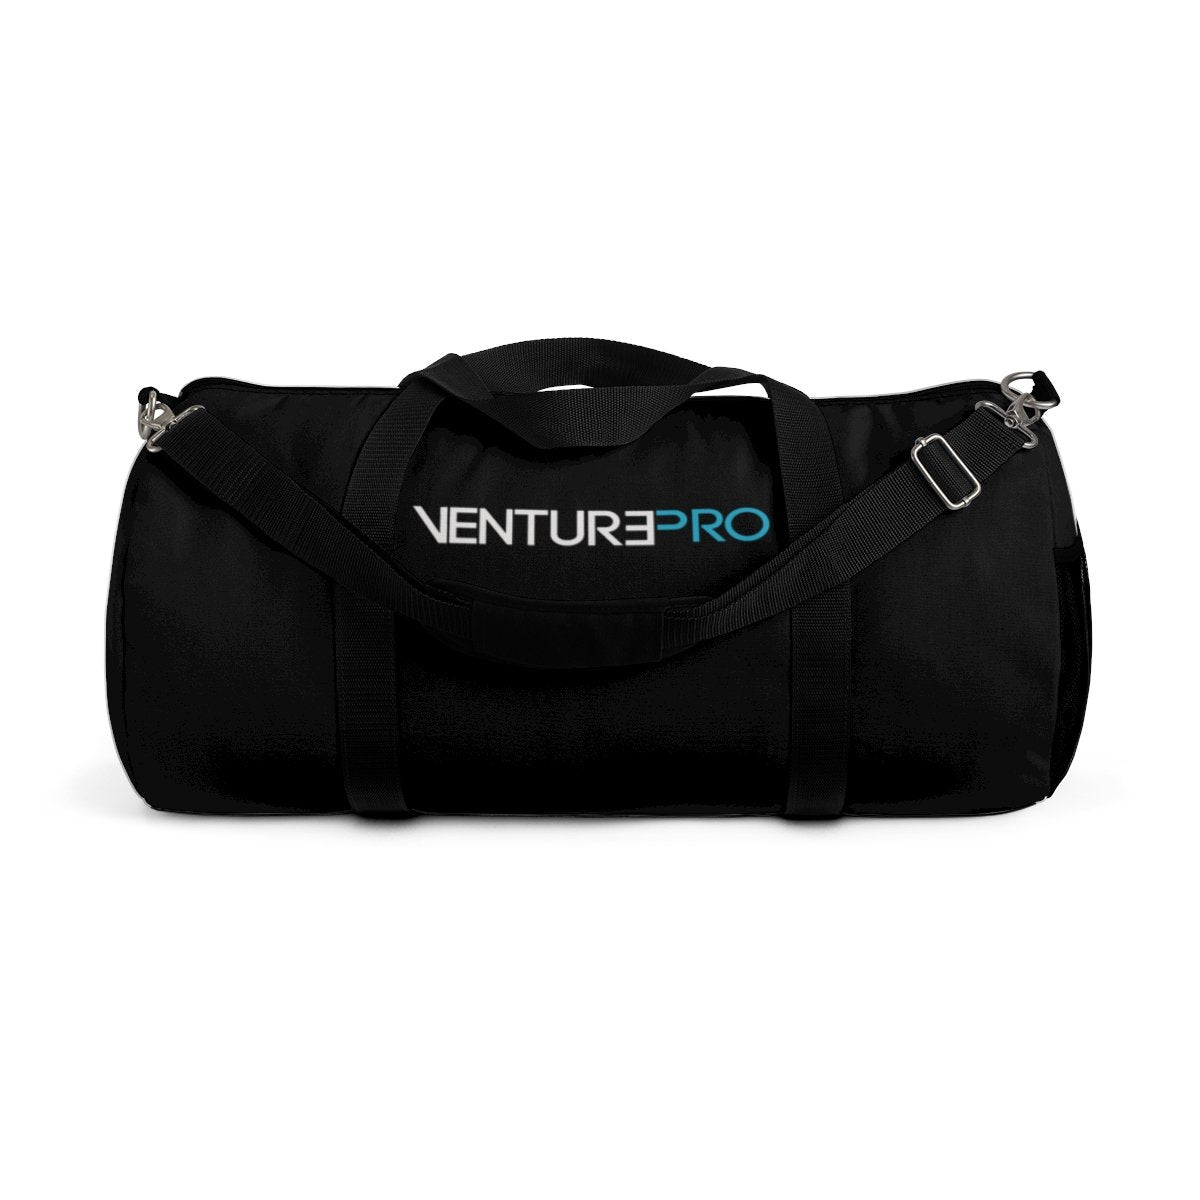 Venture Pro Duffle Bag